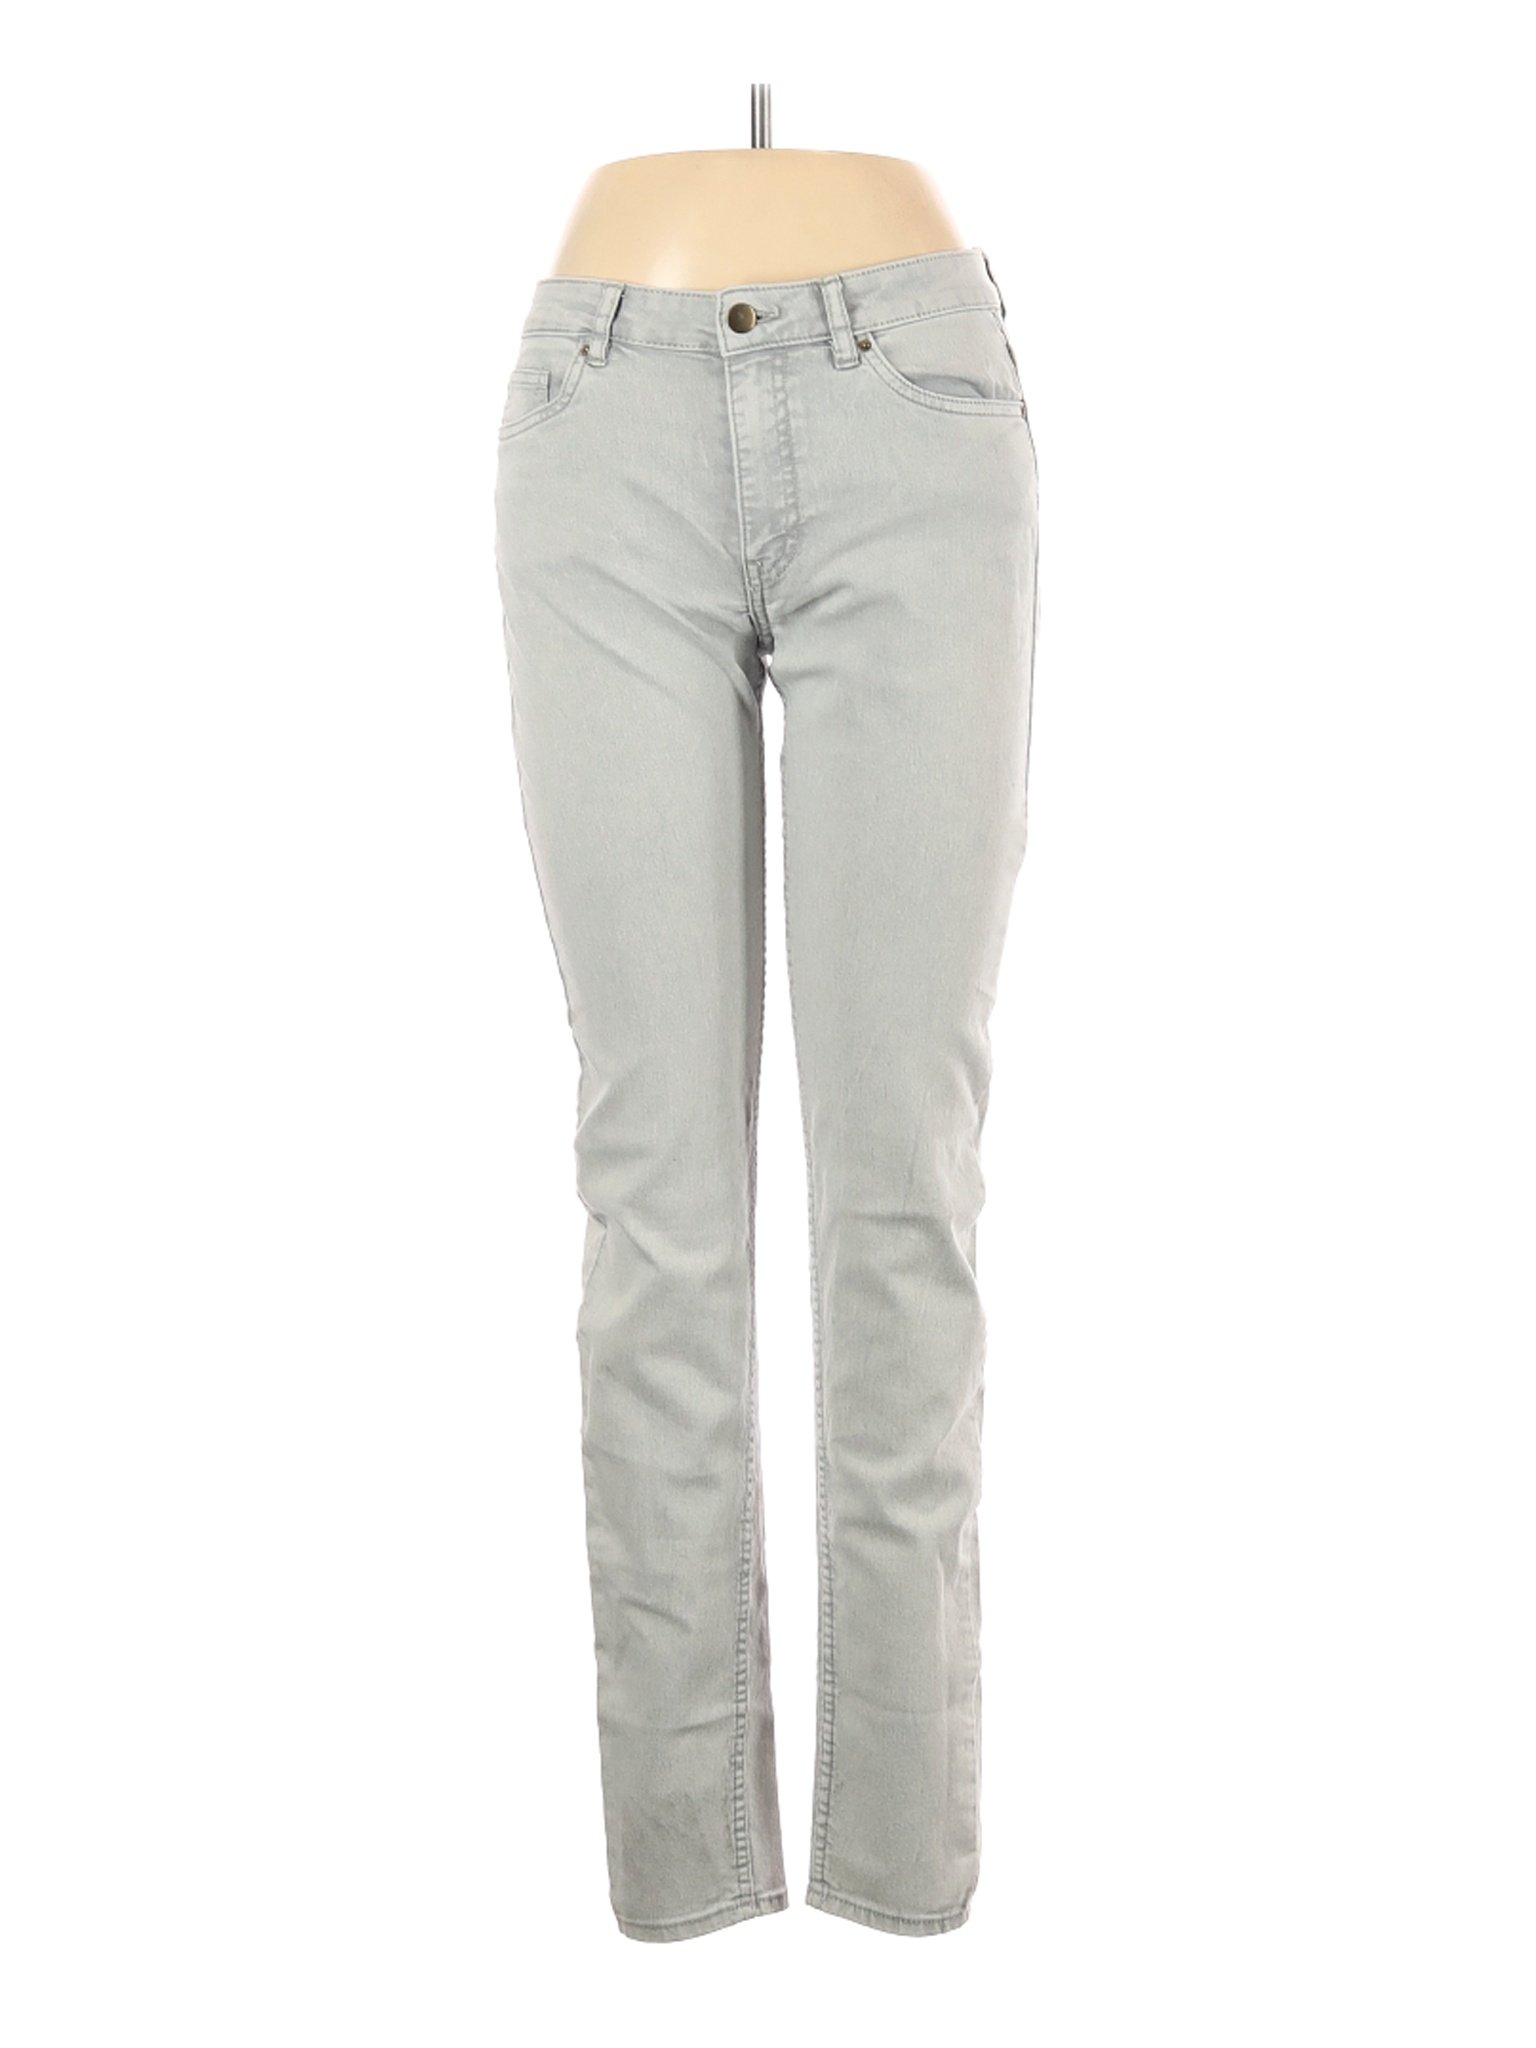 H&M Women Gray Jeans 8 | eBay